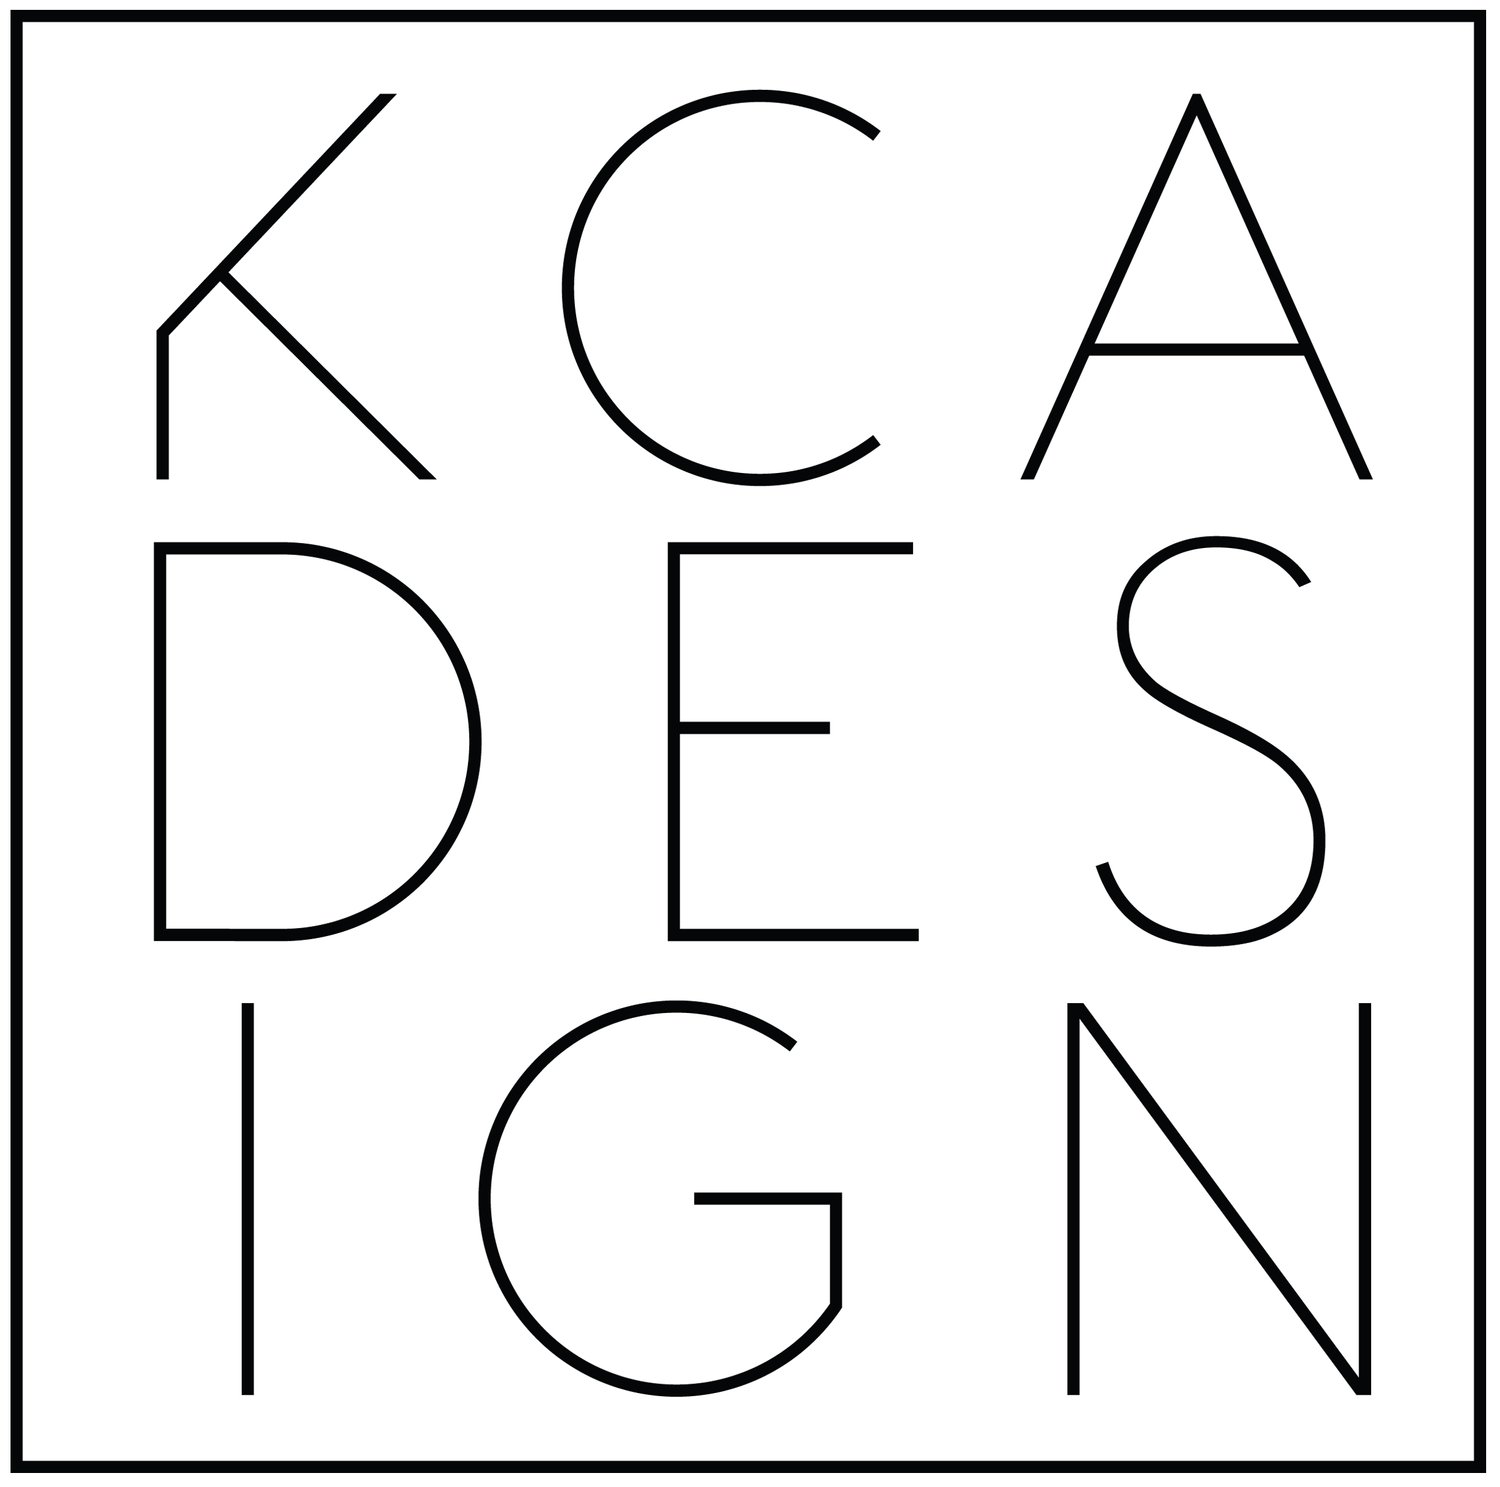 kca design